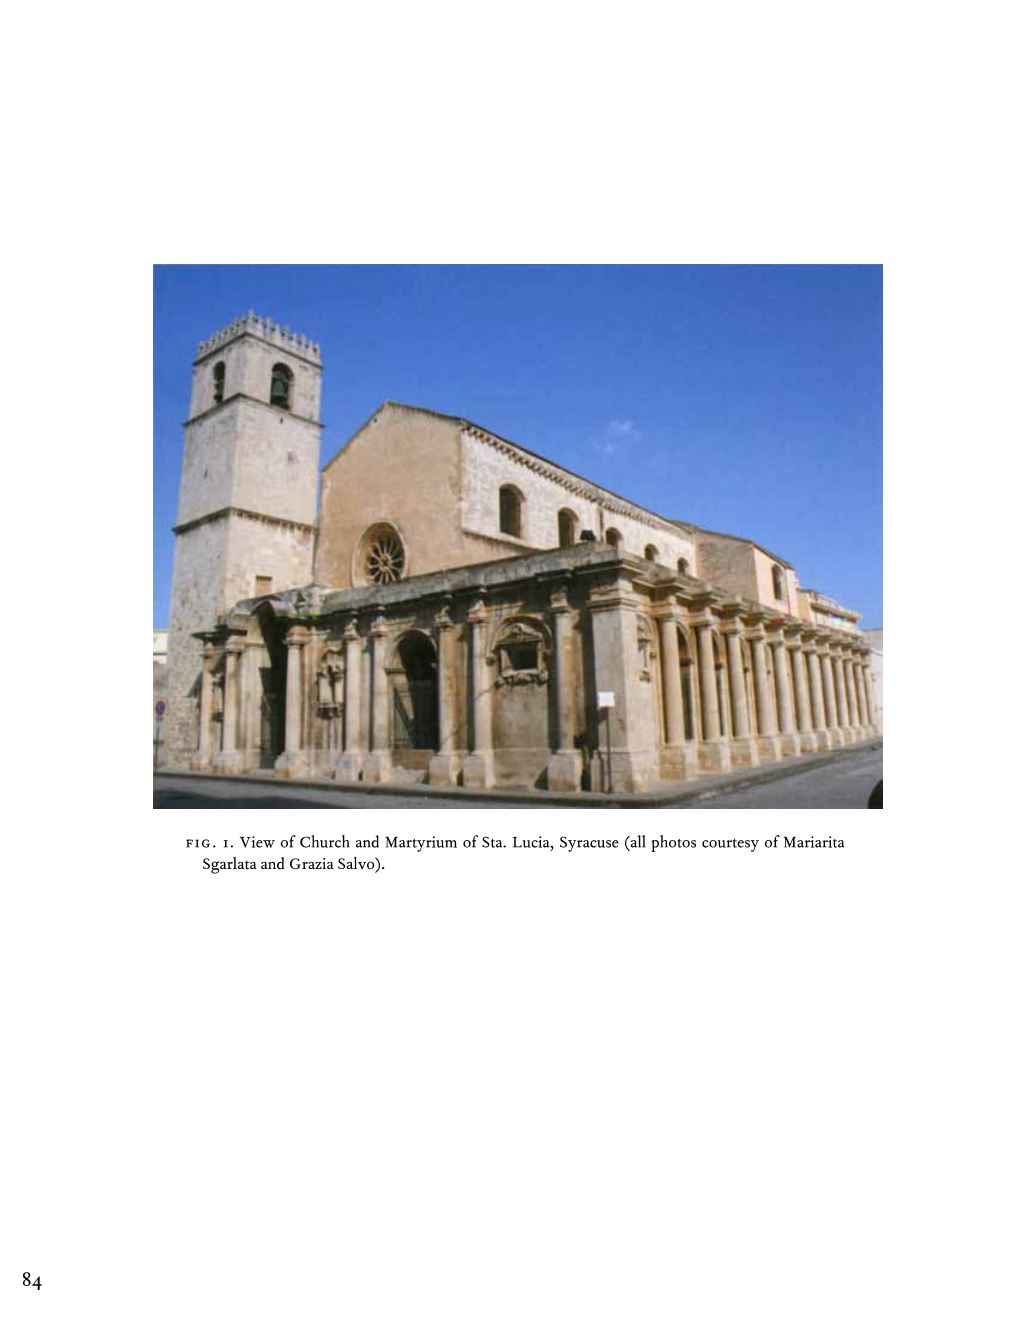 Fig. 1. View of Church and Martyrium of Sta. Lucia, Syracuse (All Photos Courtesy of Mariarita Sgarlata and Grazia Salvo)